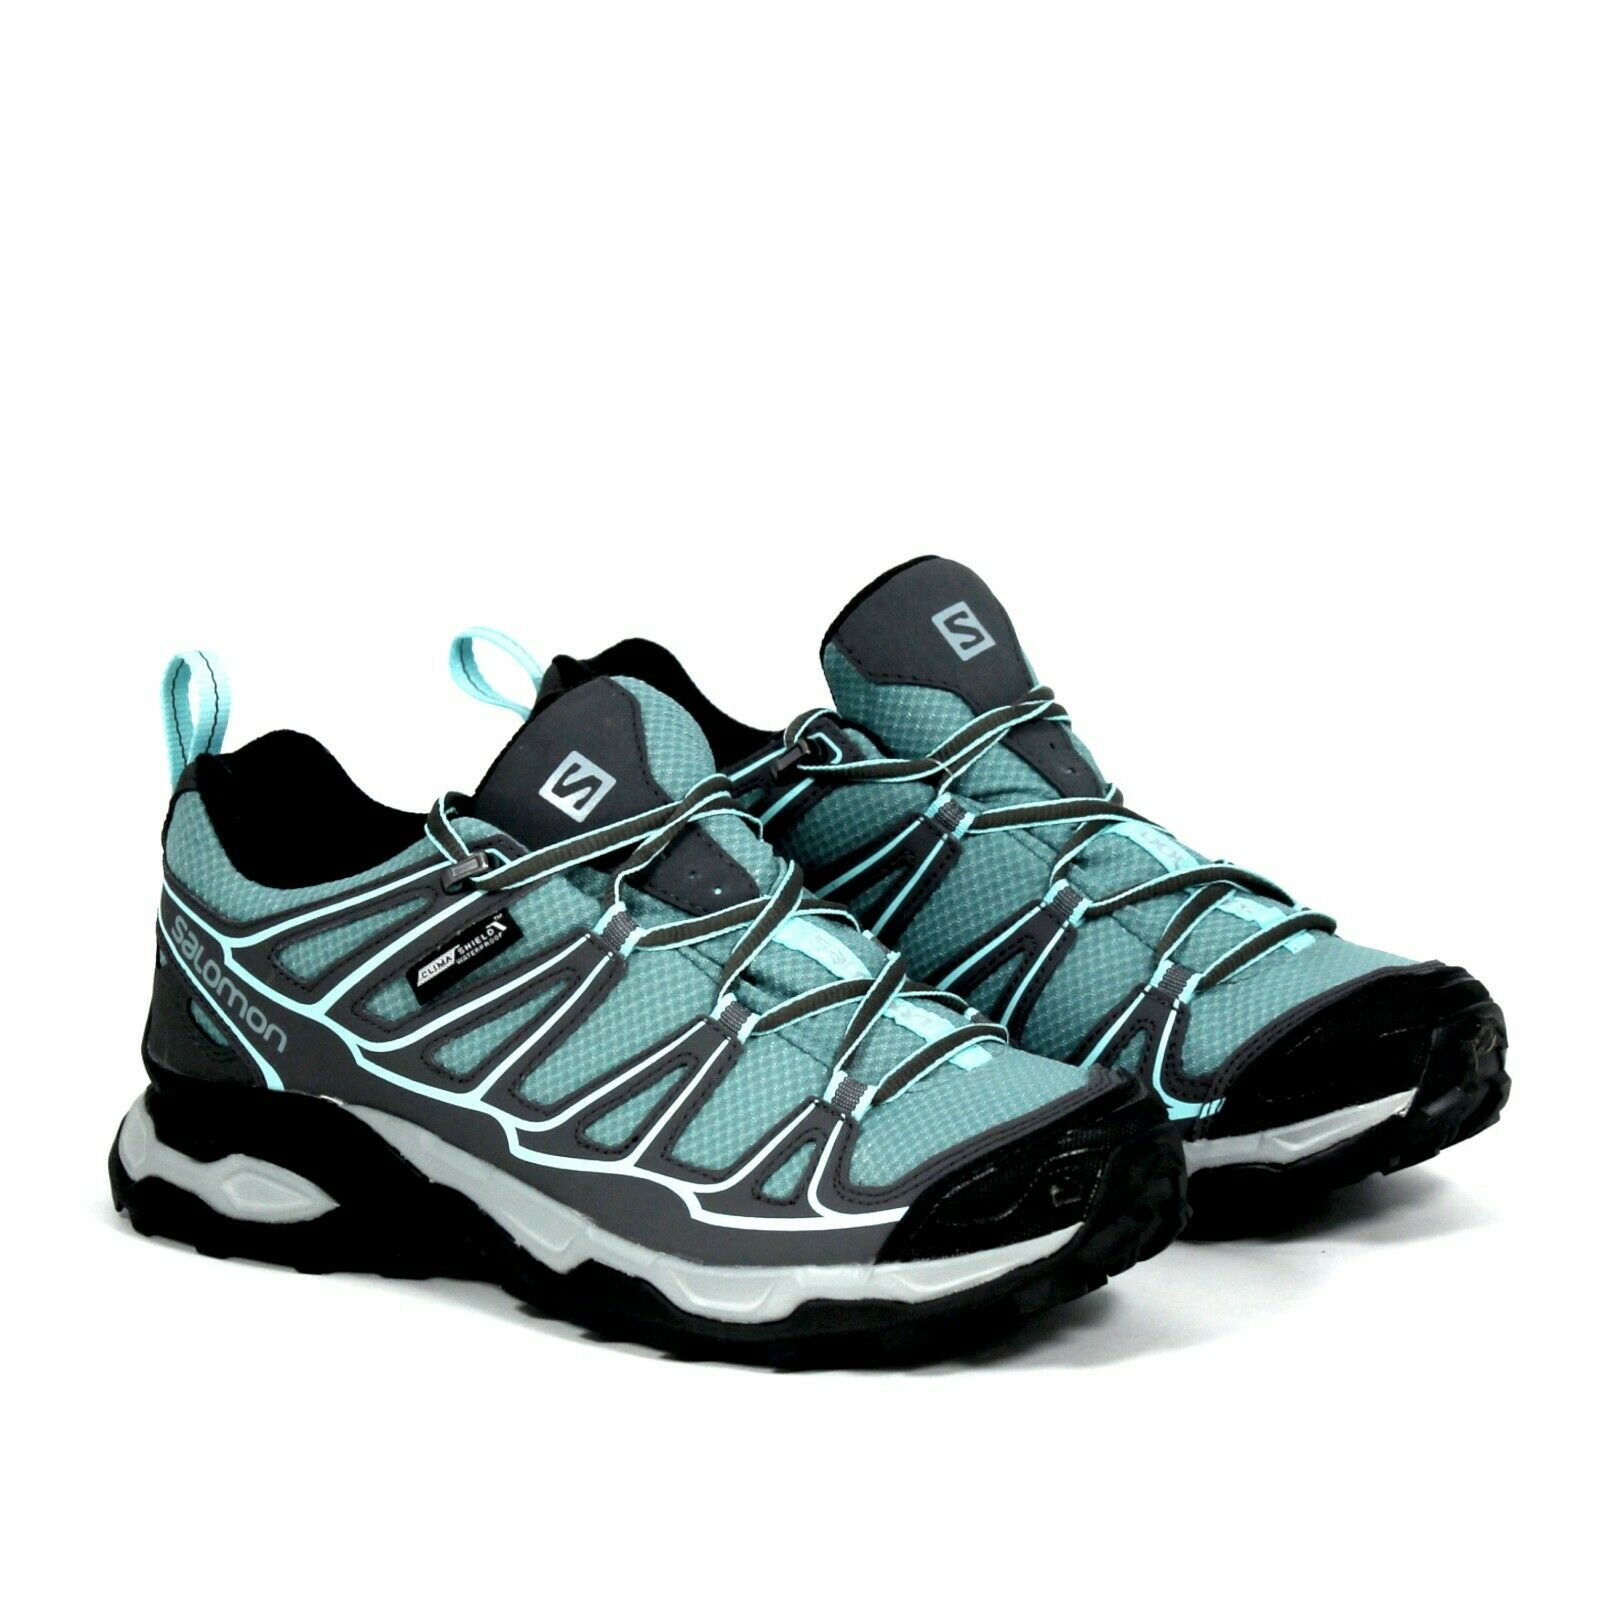 Salomon Womens X Ultra Prime CS WP Aruba Blue Grey Hiking Shoes Size 9 New